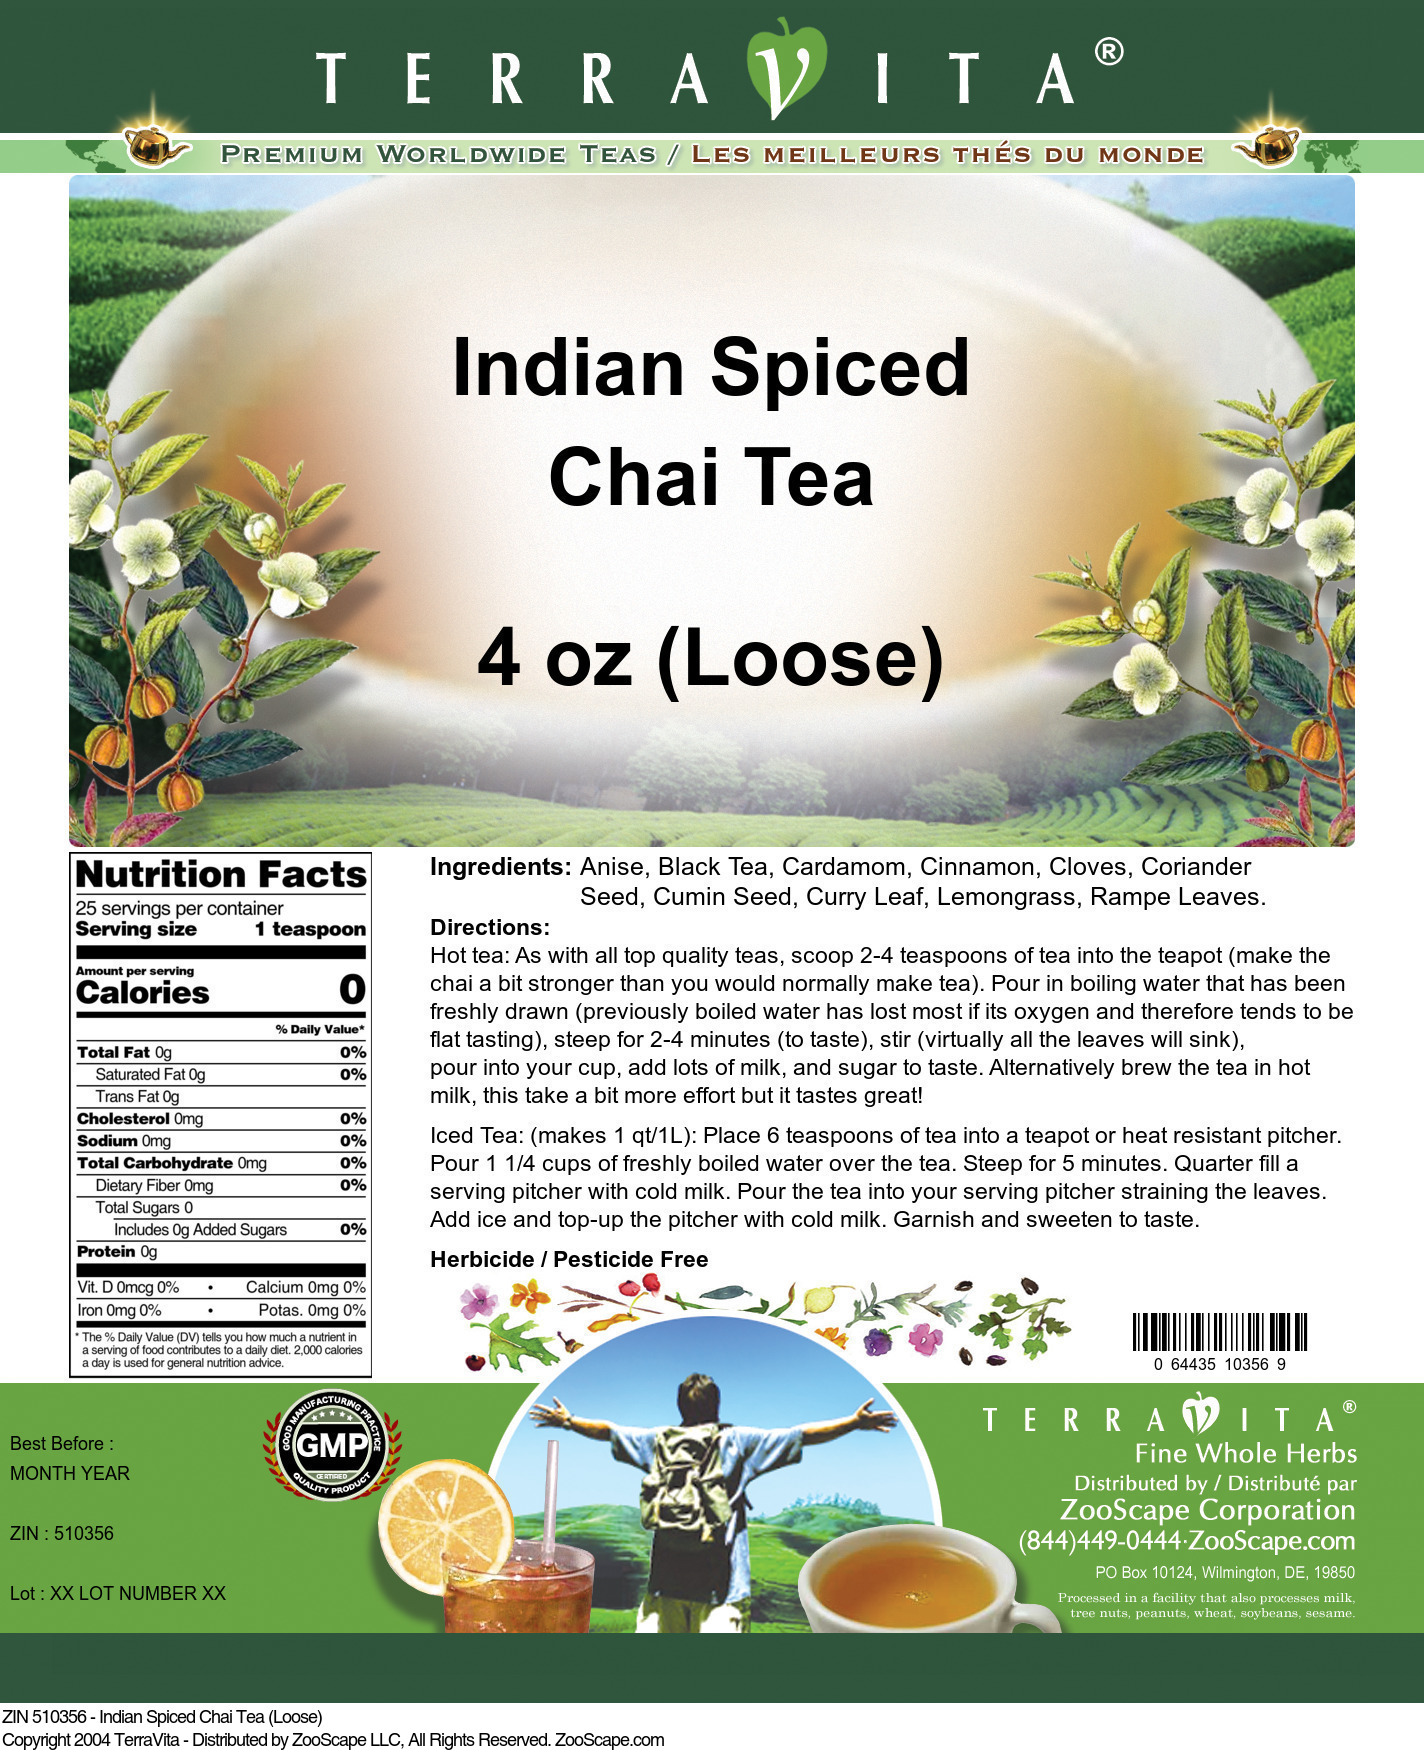 Indian Spiced Chai Tea (Loose) - Label